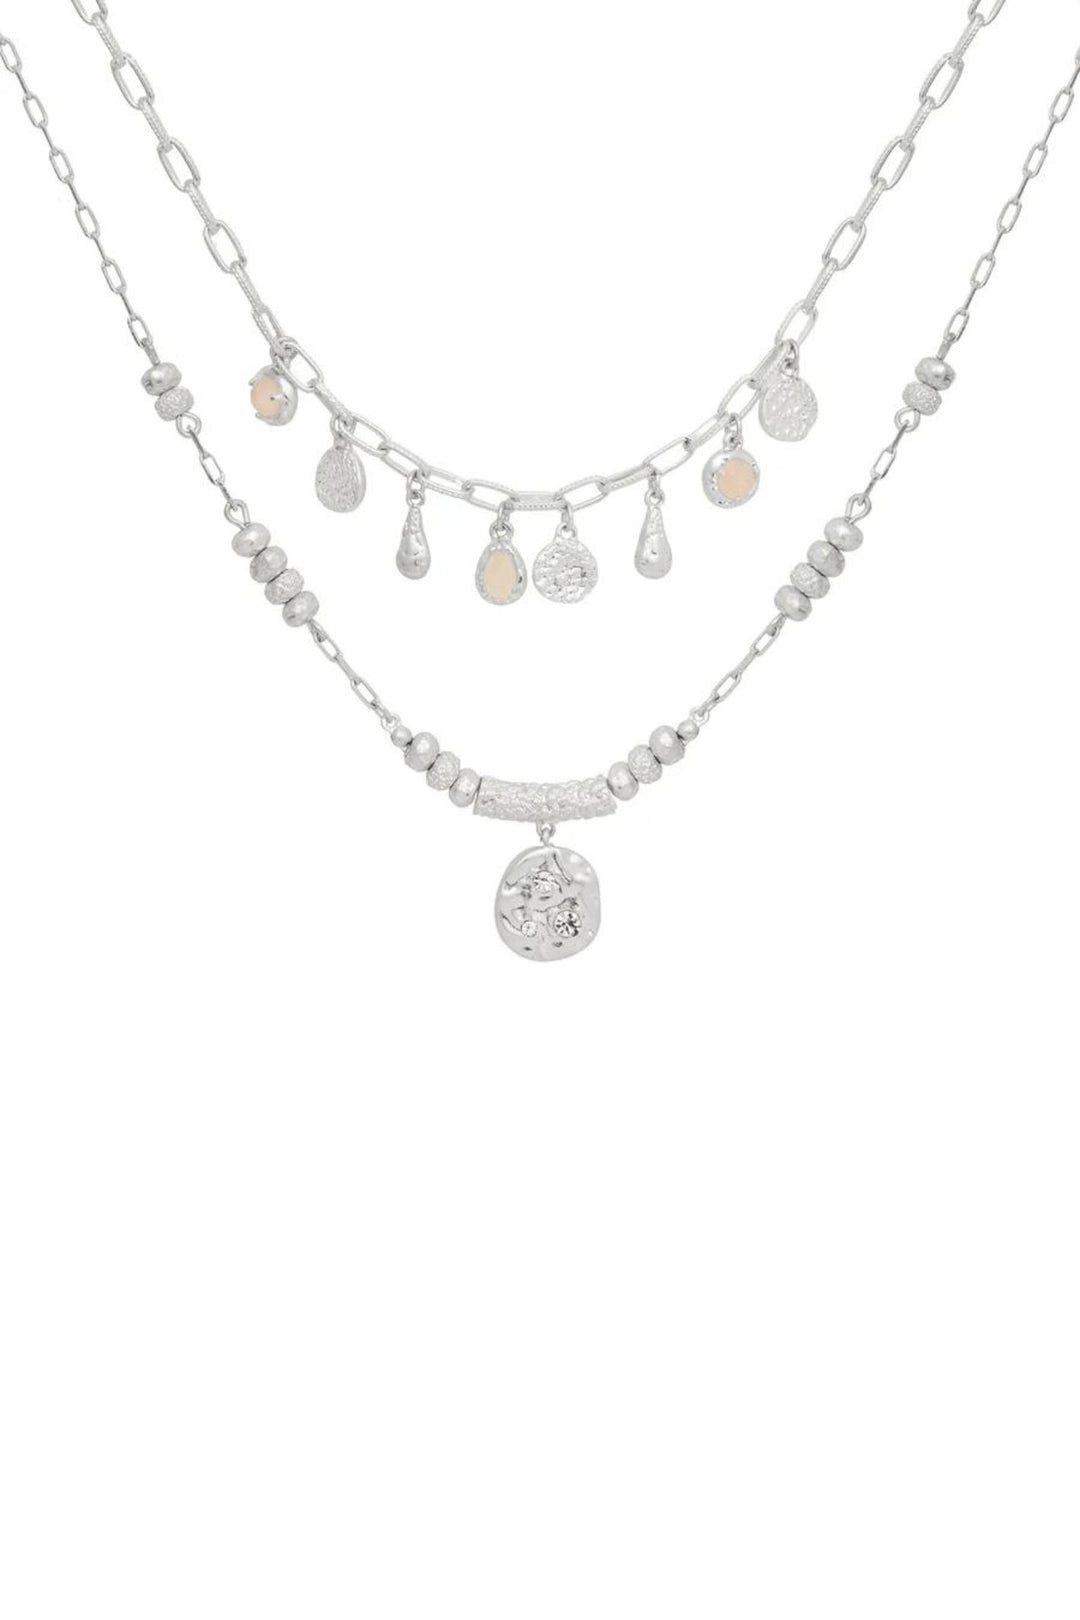 Bibi Bijoux Silver Savannah Layered Necklace